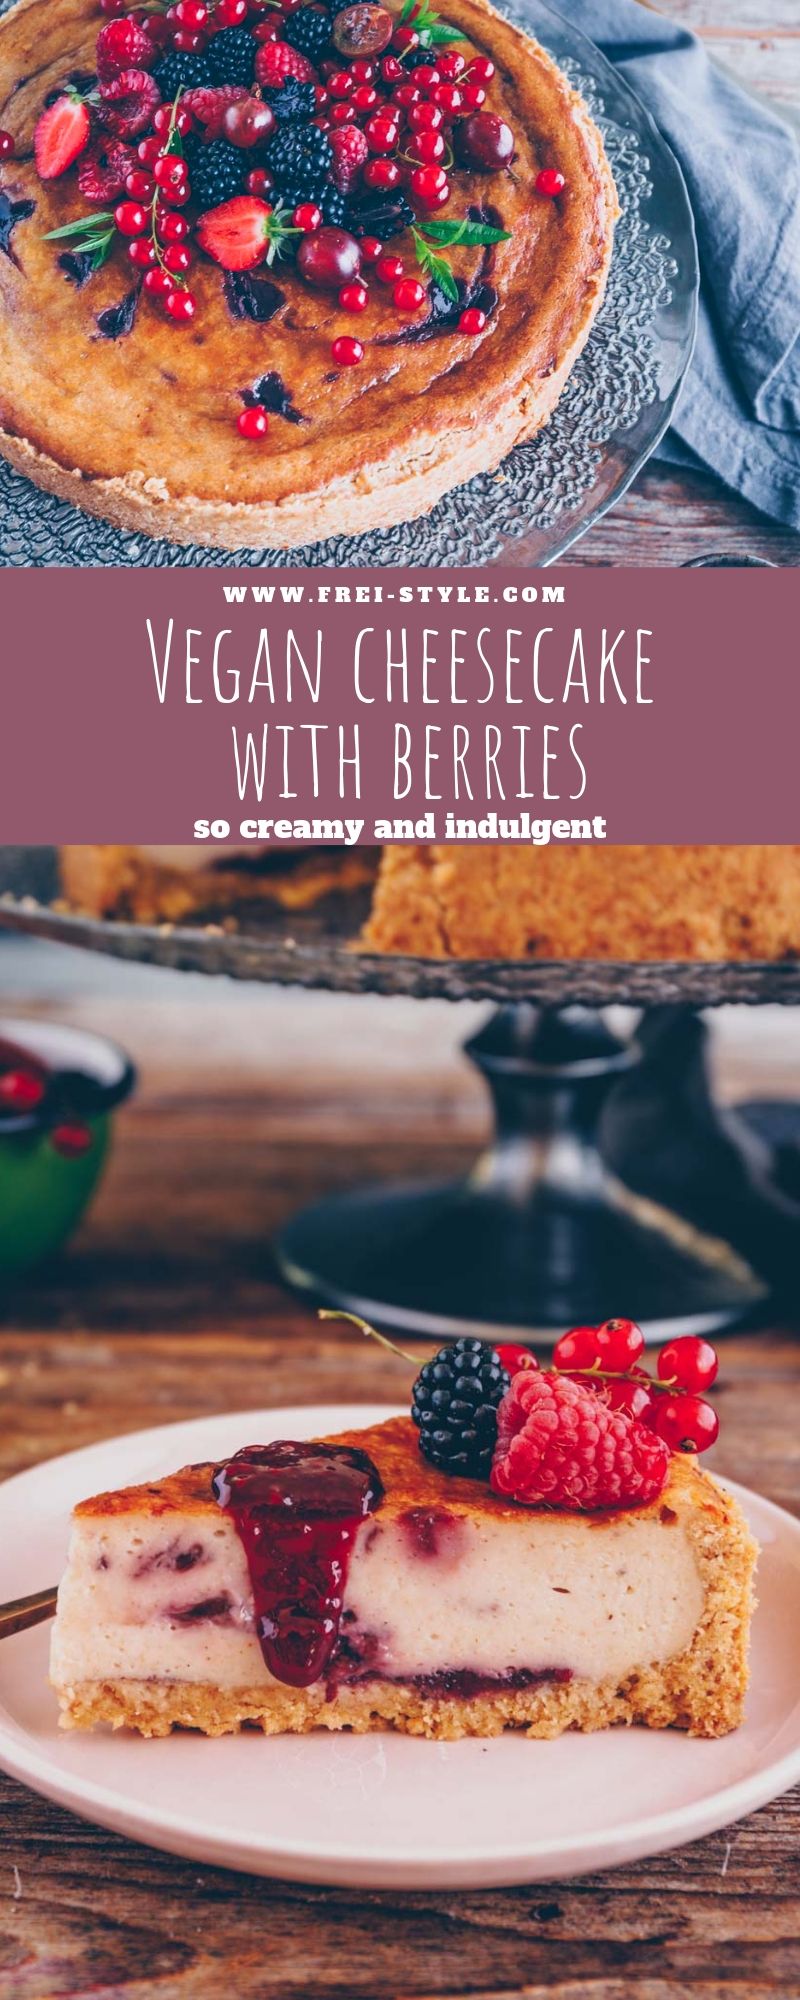 Vegan cheesecake with raspberries * Freistyle by Verena Frei